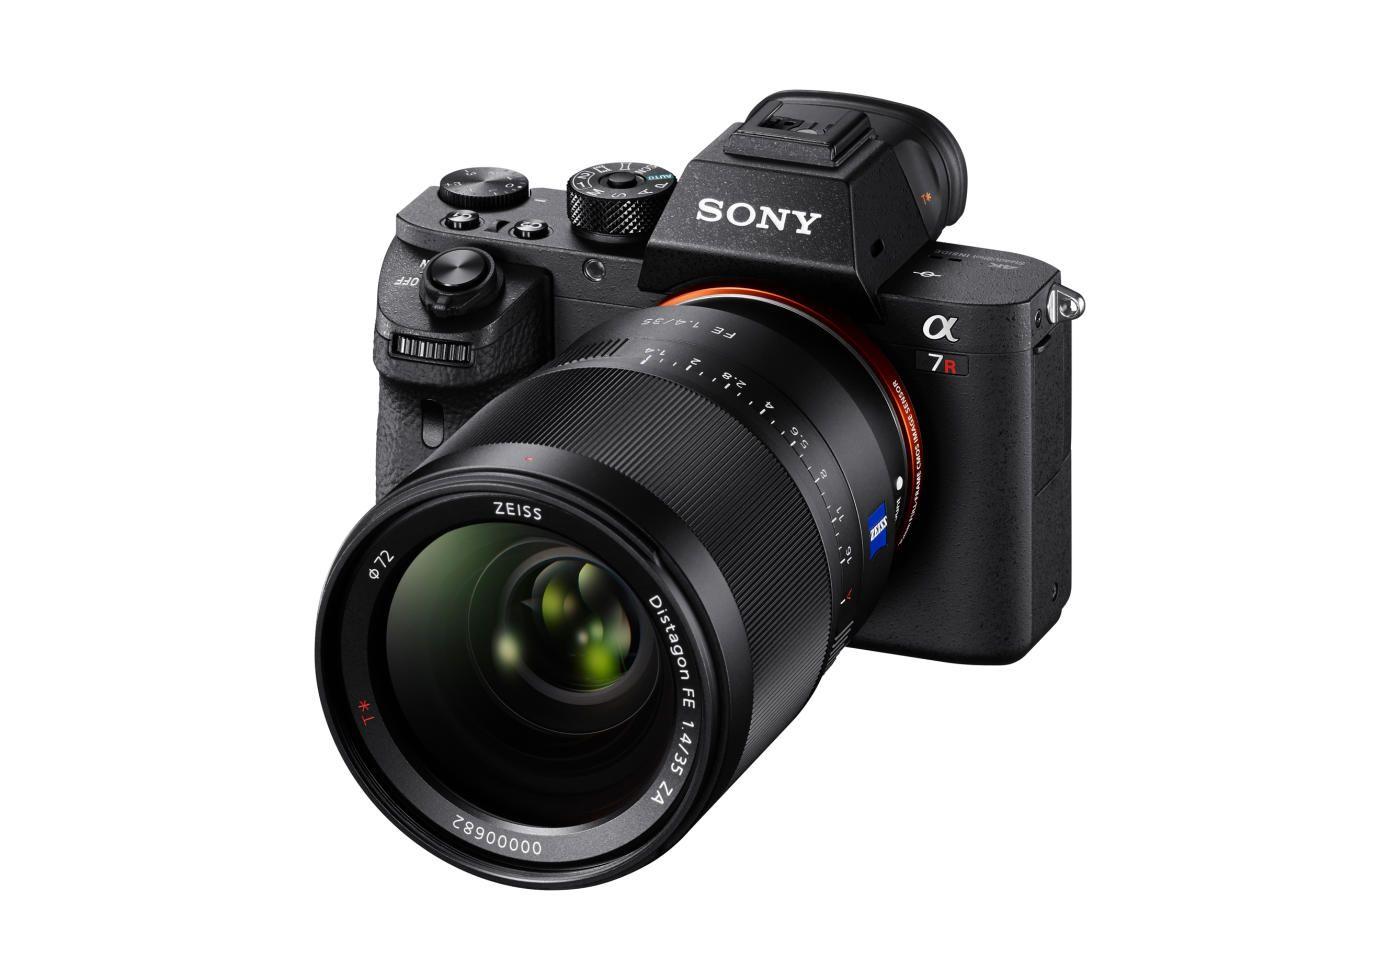 Sony Digital Camera - A Review